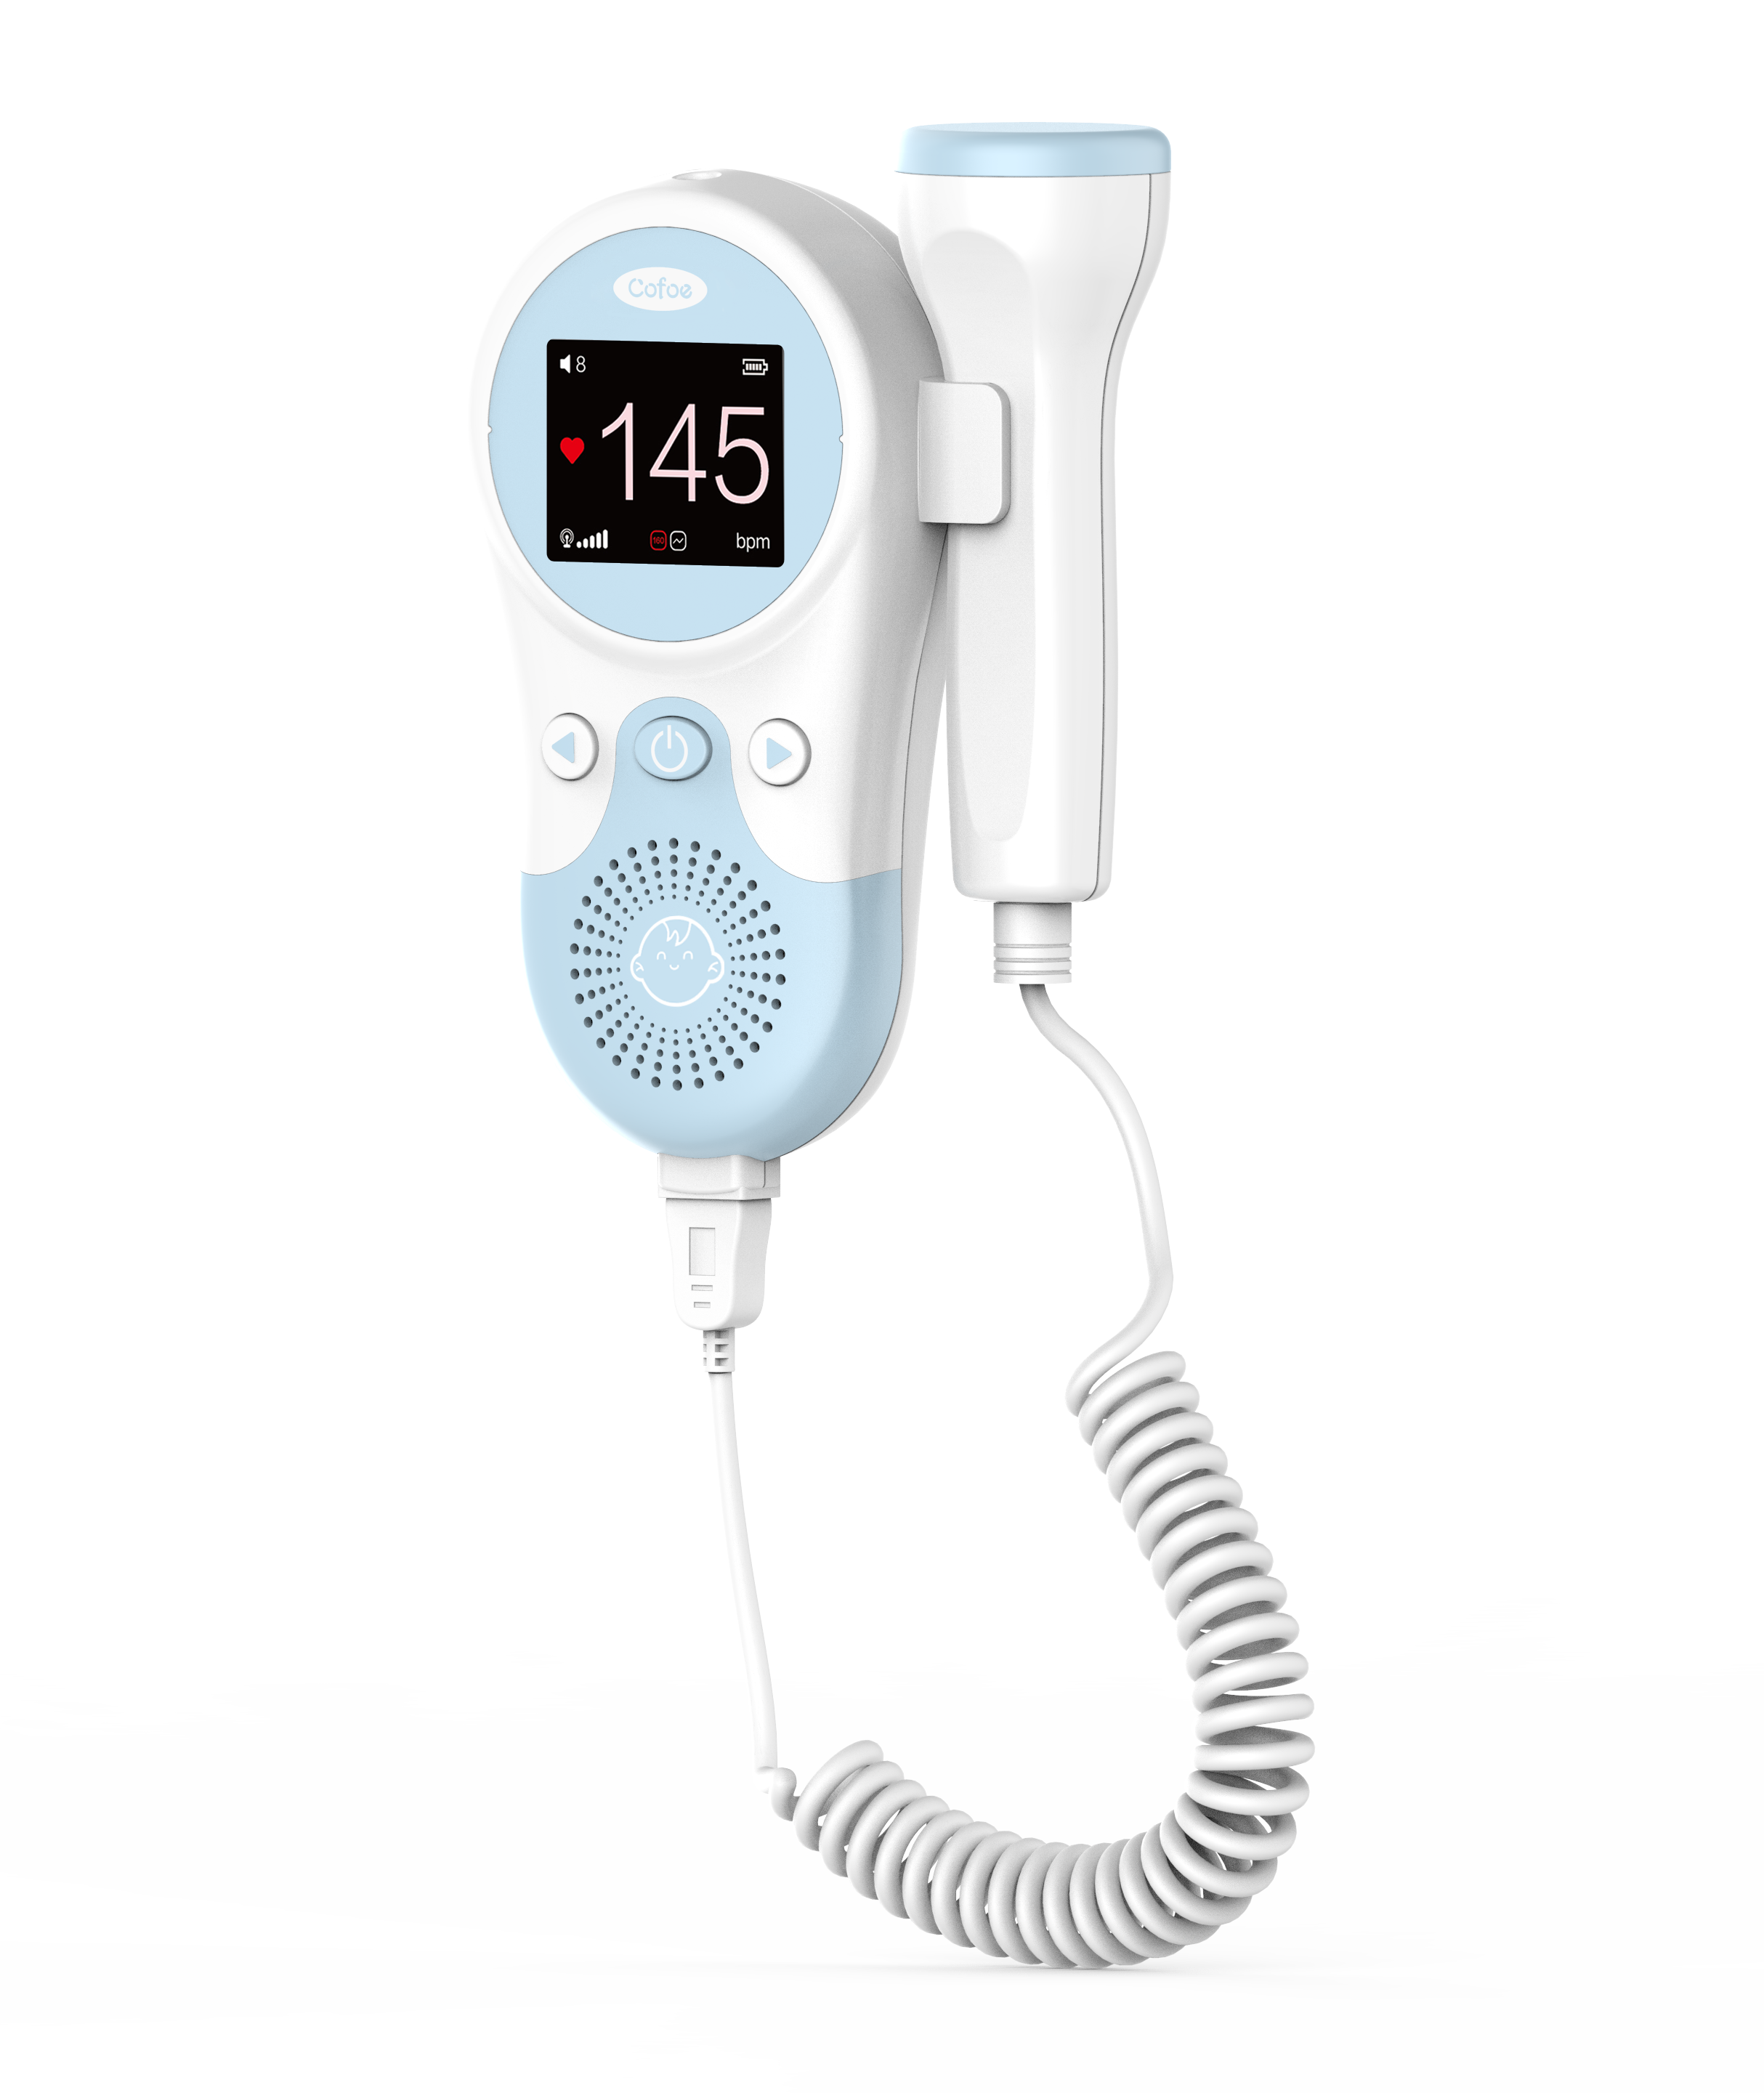 HB-1004S Cofoe New Style Desktop Fetal Doppler Monitoreo fetal 